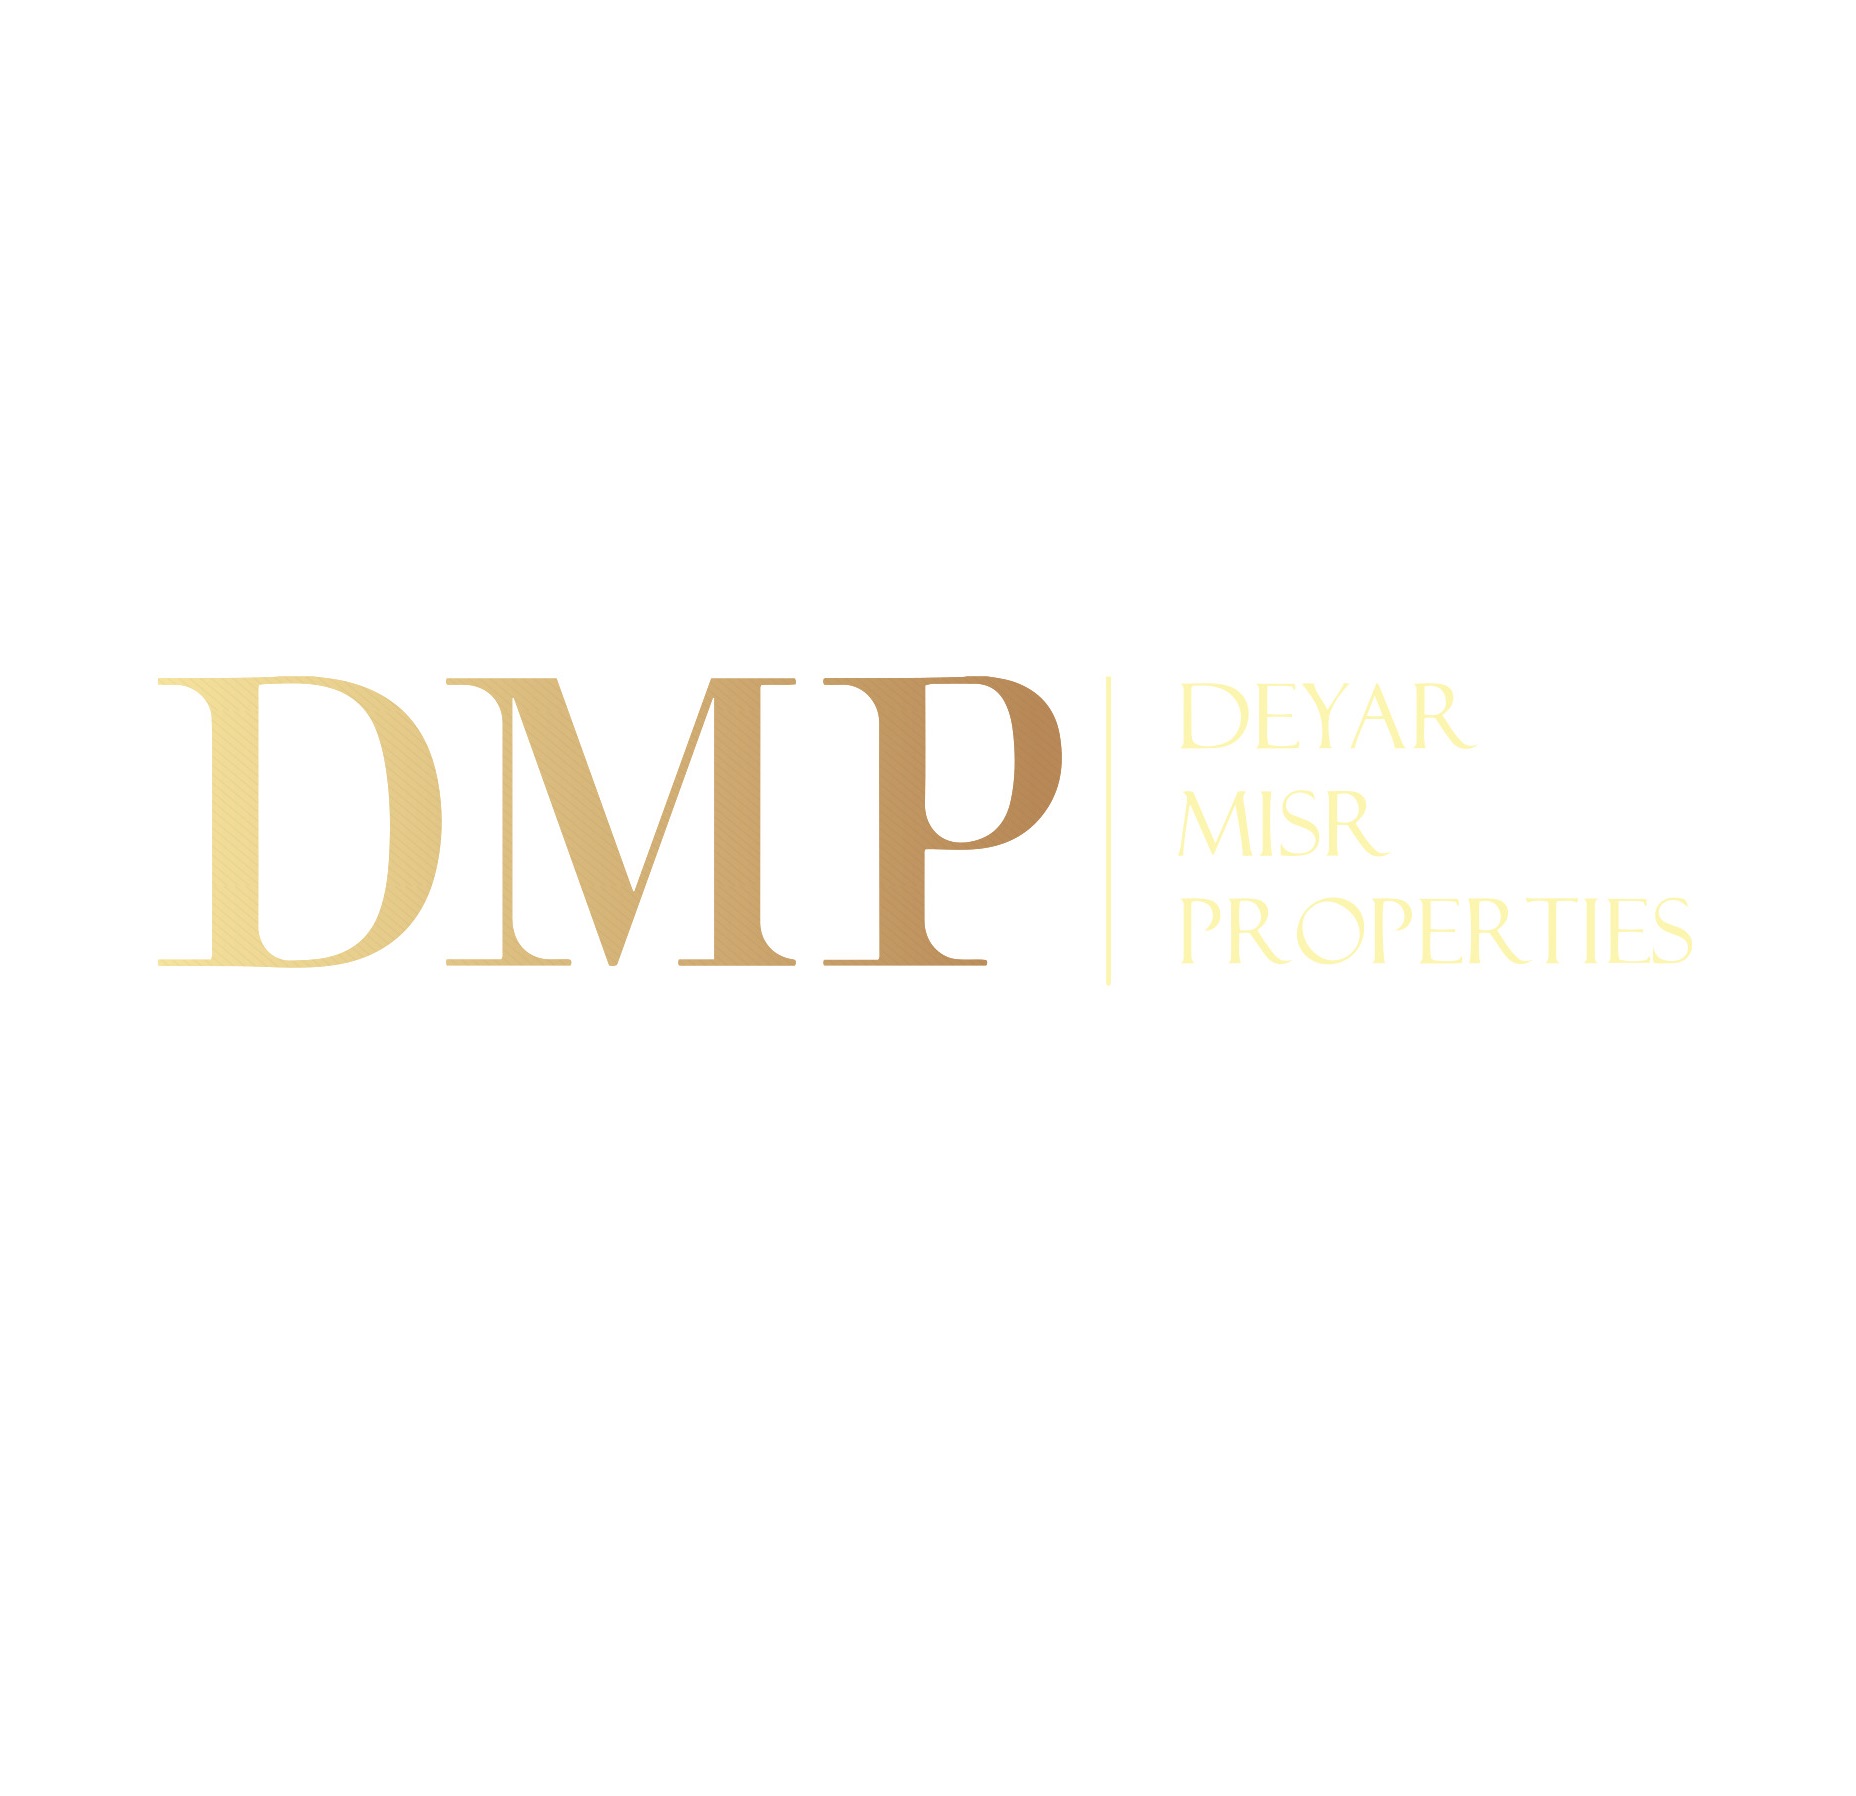 Deyar Misr Properties